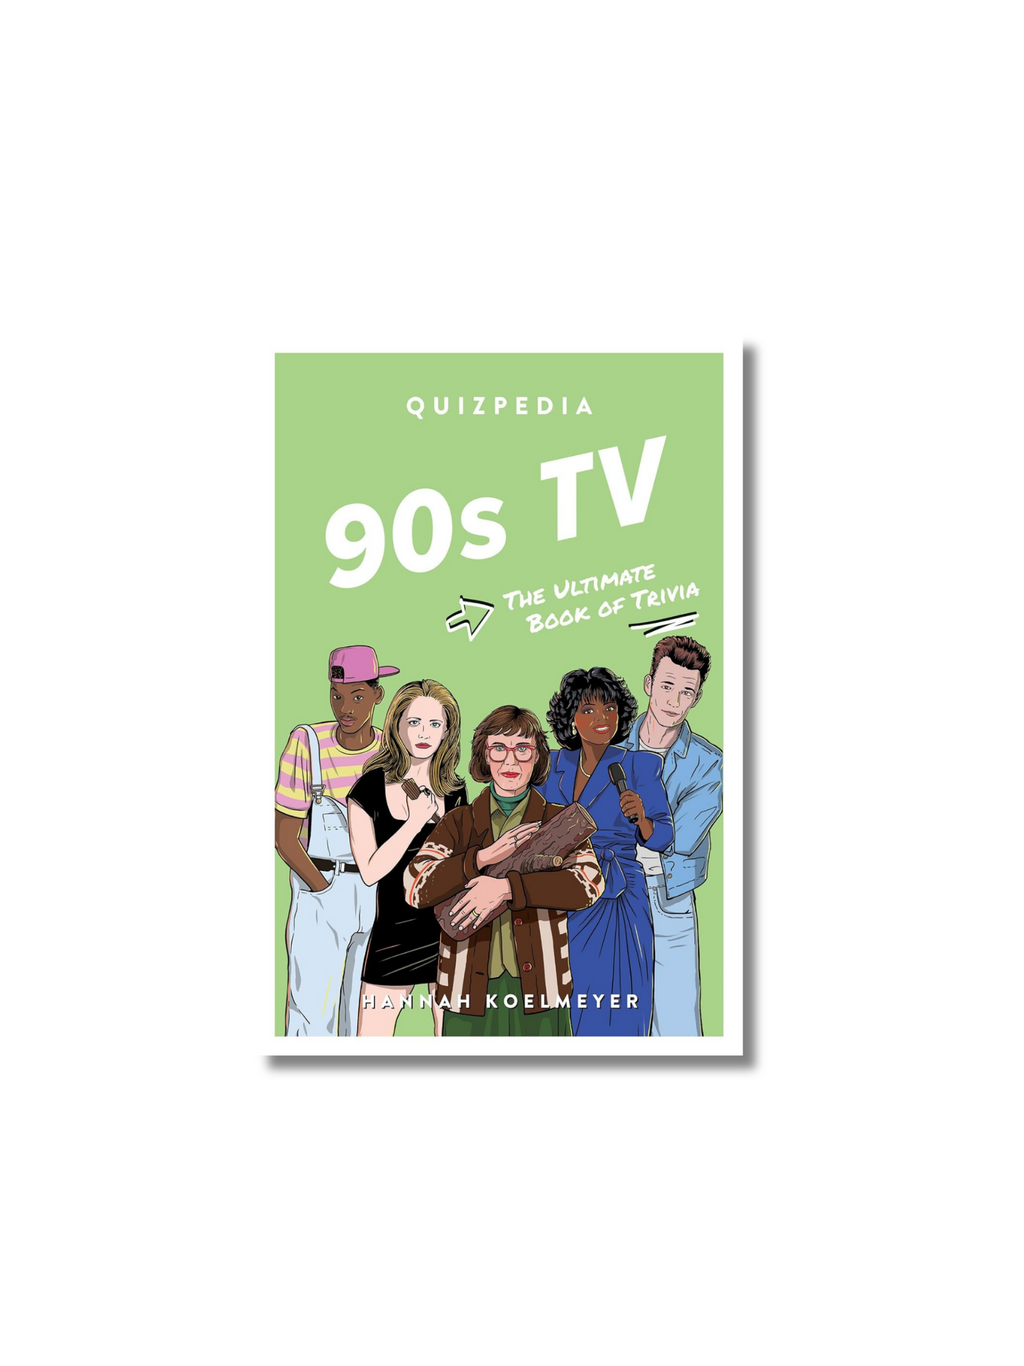 90s TV Quizpedia: The ultimate book of trivia